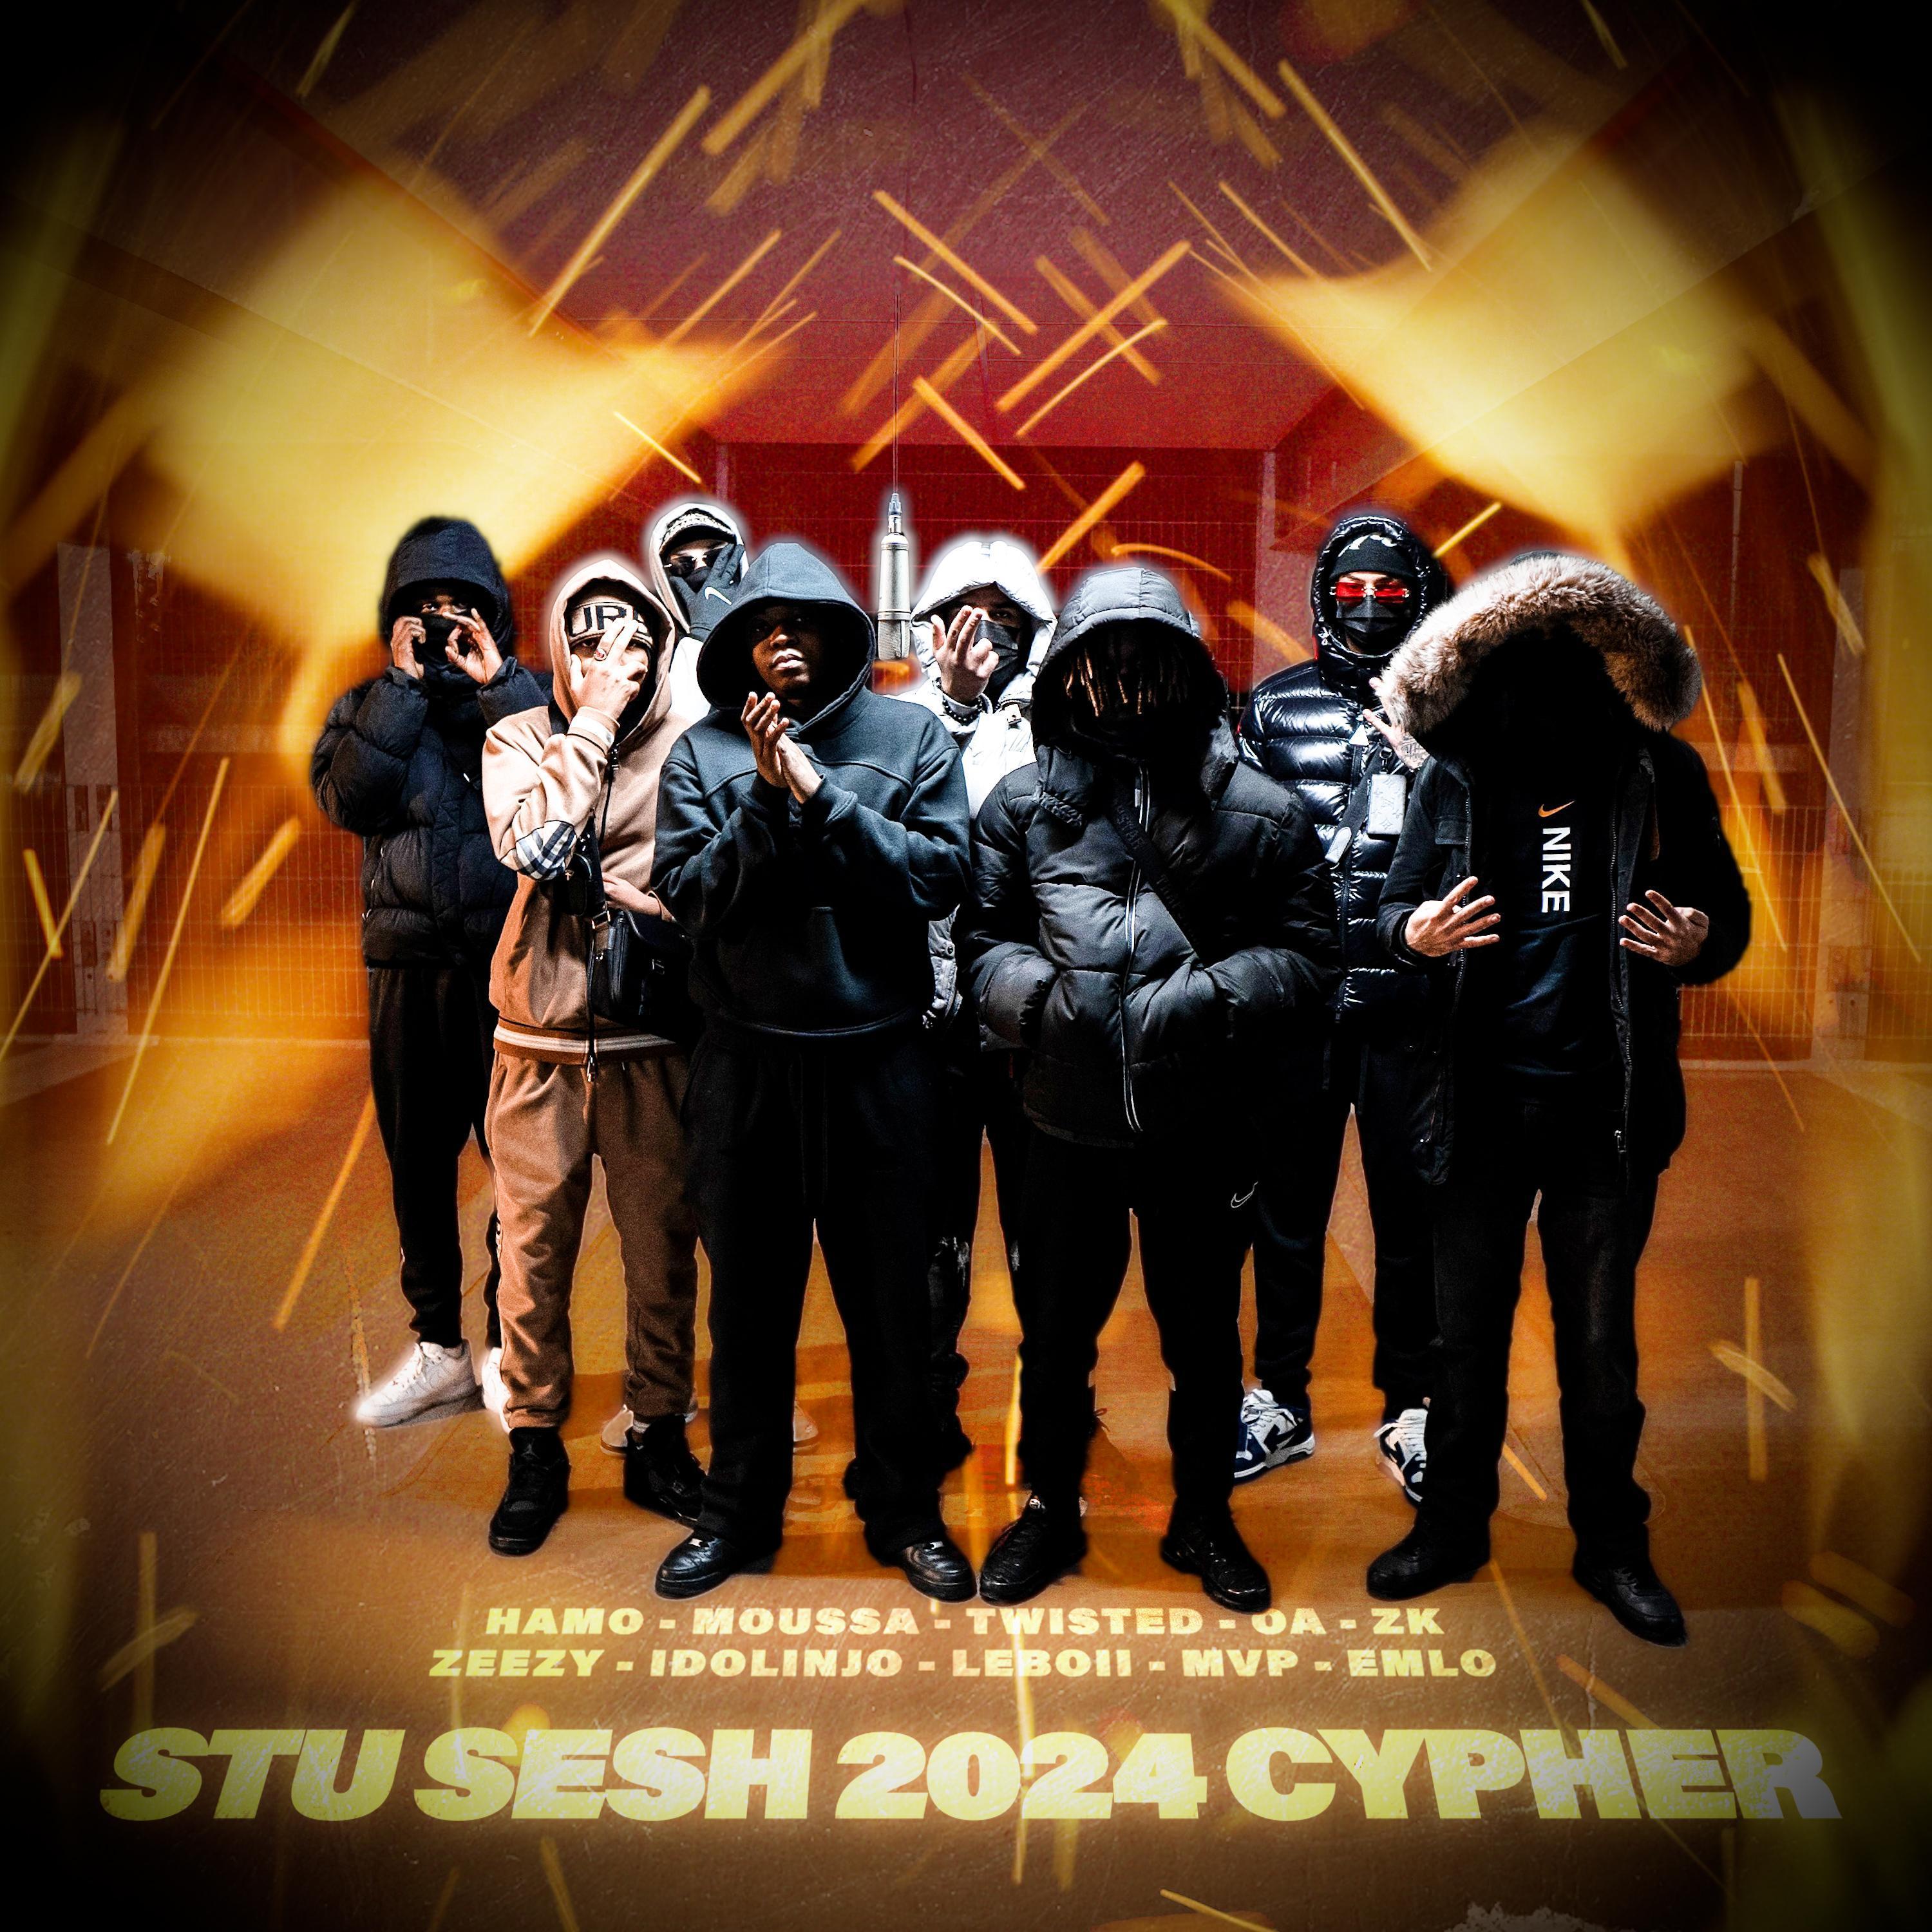 Stu Sesh - 2024 Cypher (feat. Moussa, Twisted!, OA, ZK, Zeezy, idolinjo, Leboii, Emlo & youknowmvp)